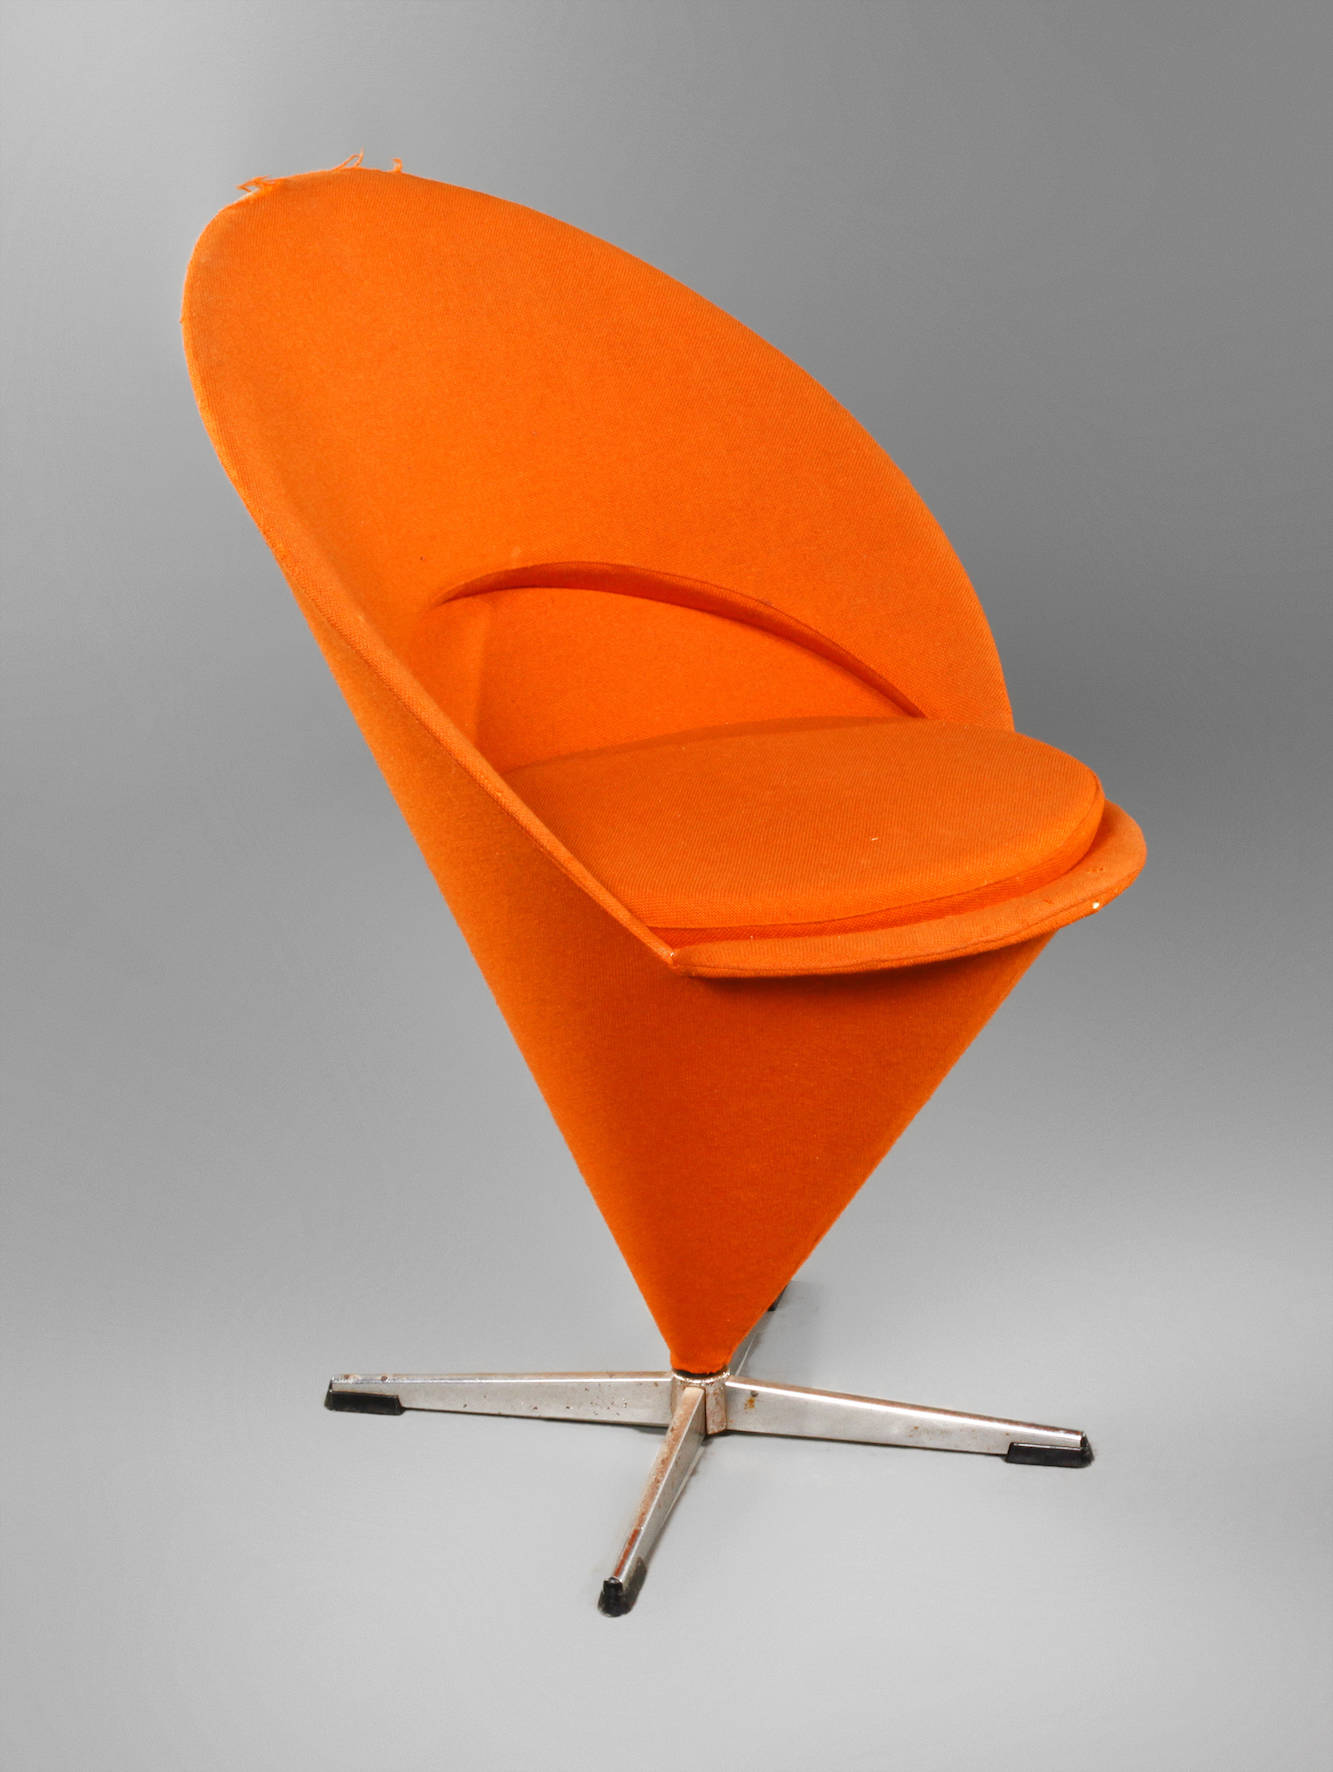 Verner Panton, Cone Chair